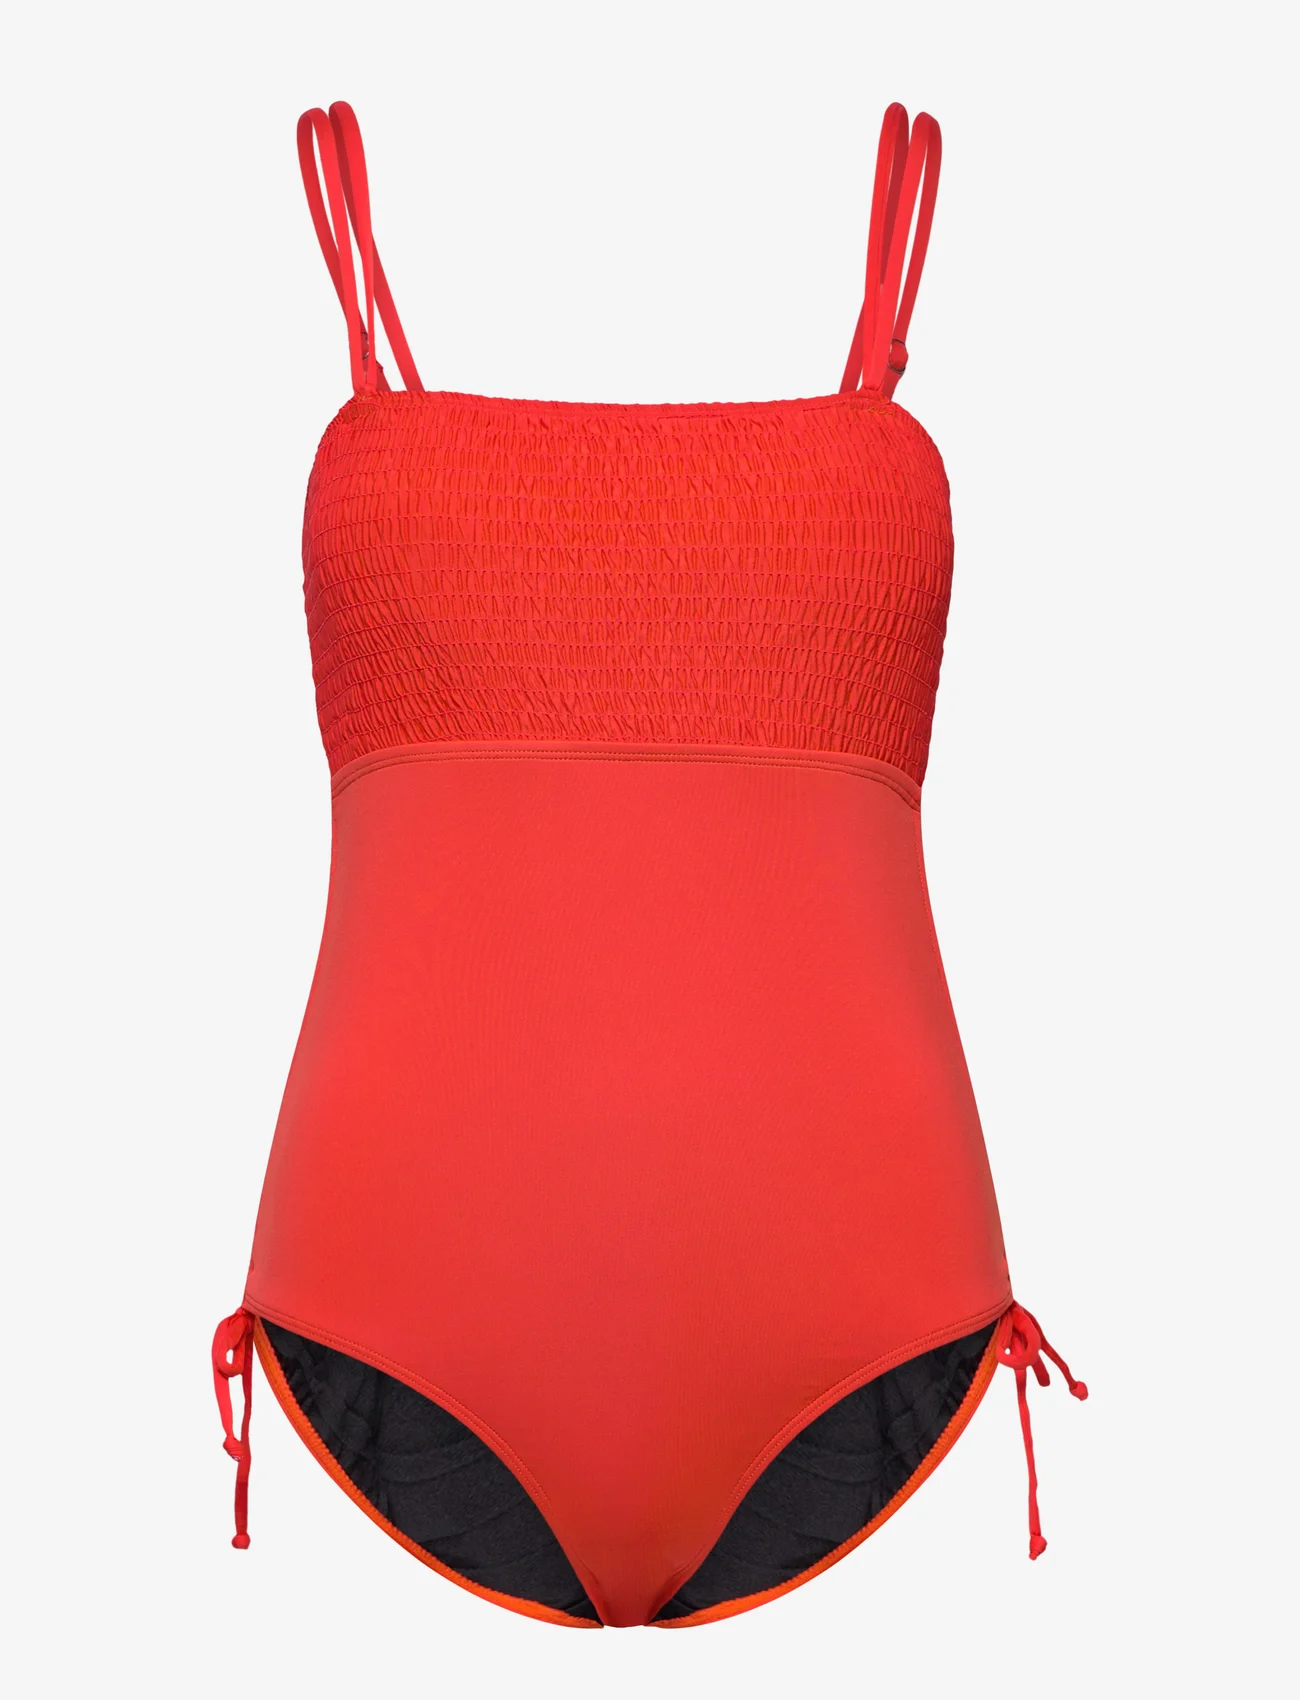 Gestuz - EyjaGZ swimsuit - baddräkter - red alert - 0